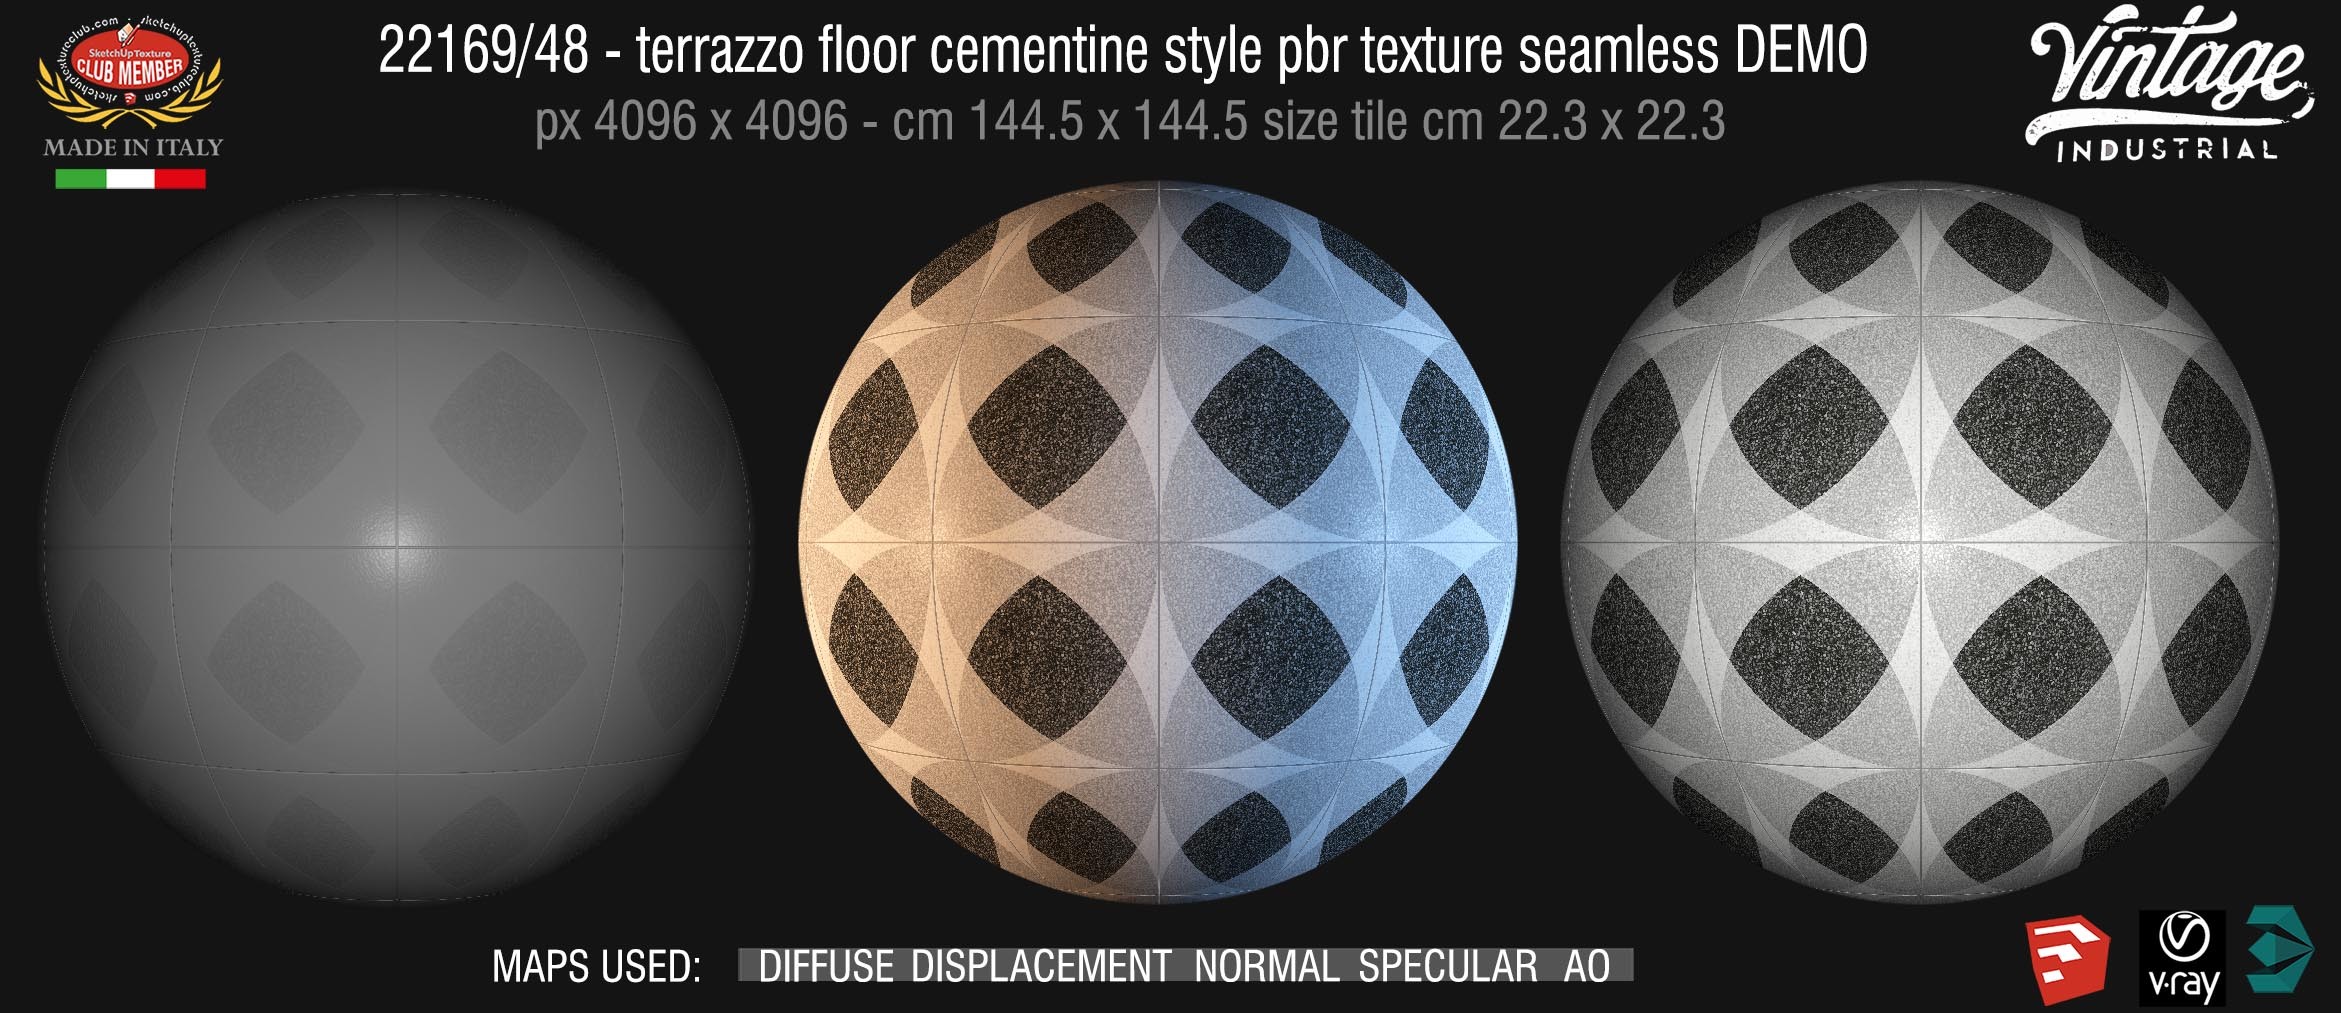 22169/48 terrazzo floor cementine style pbr texture seamless DEMO - A new range of micro-terrazzo tiles reminiscent of vintage cement tiles